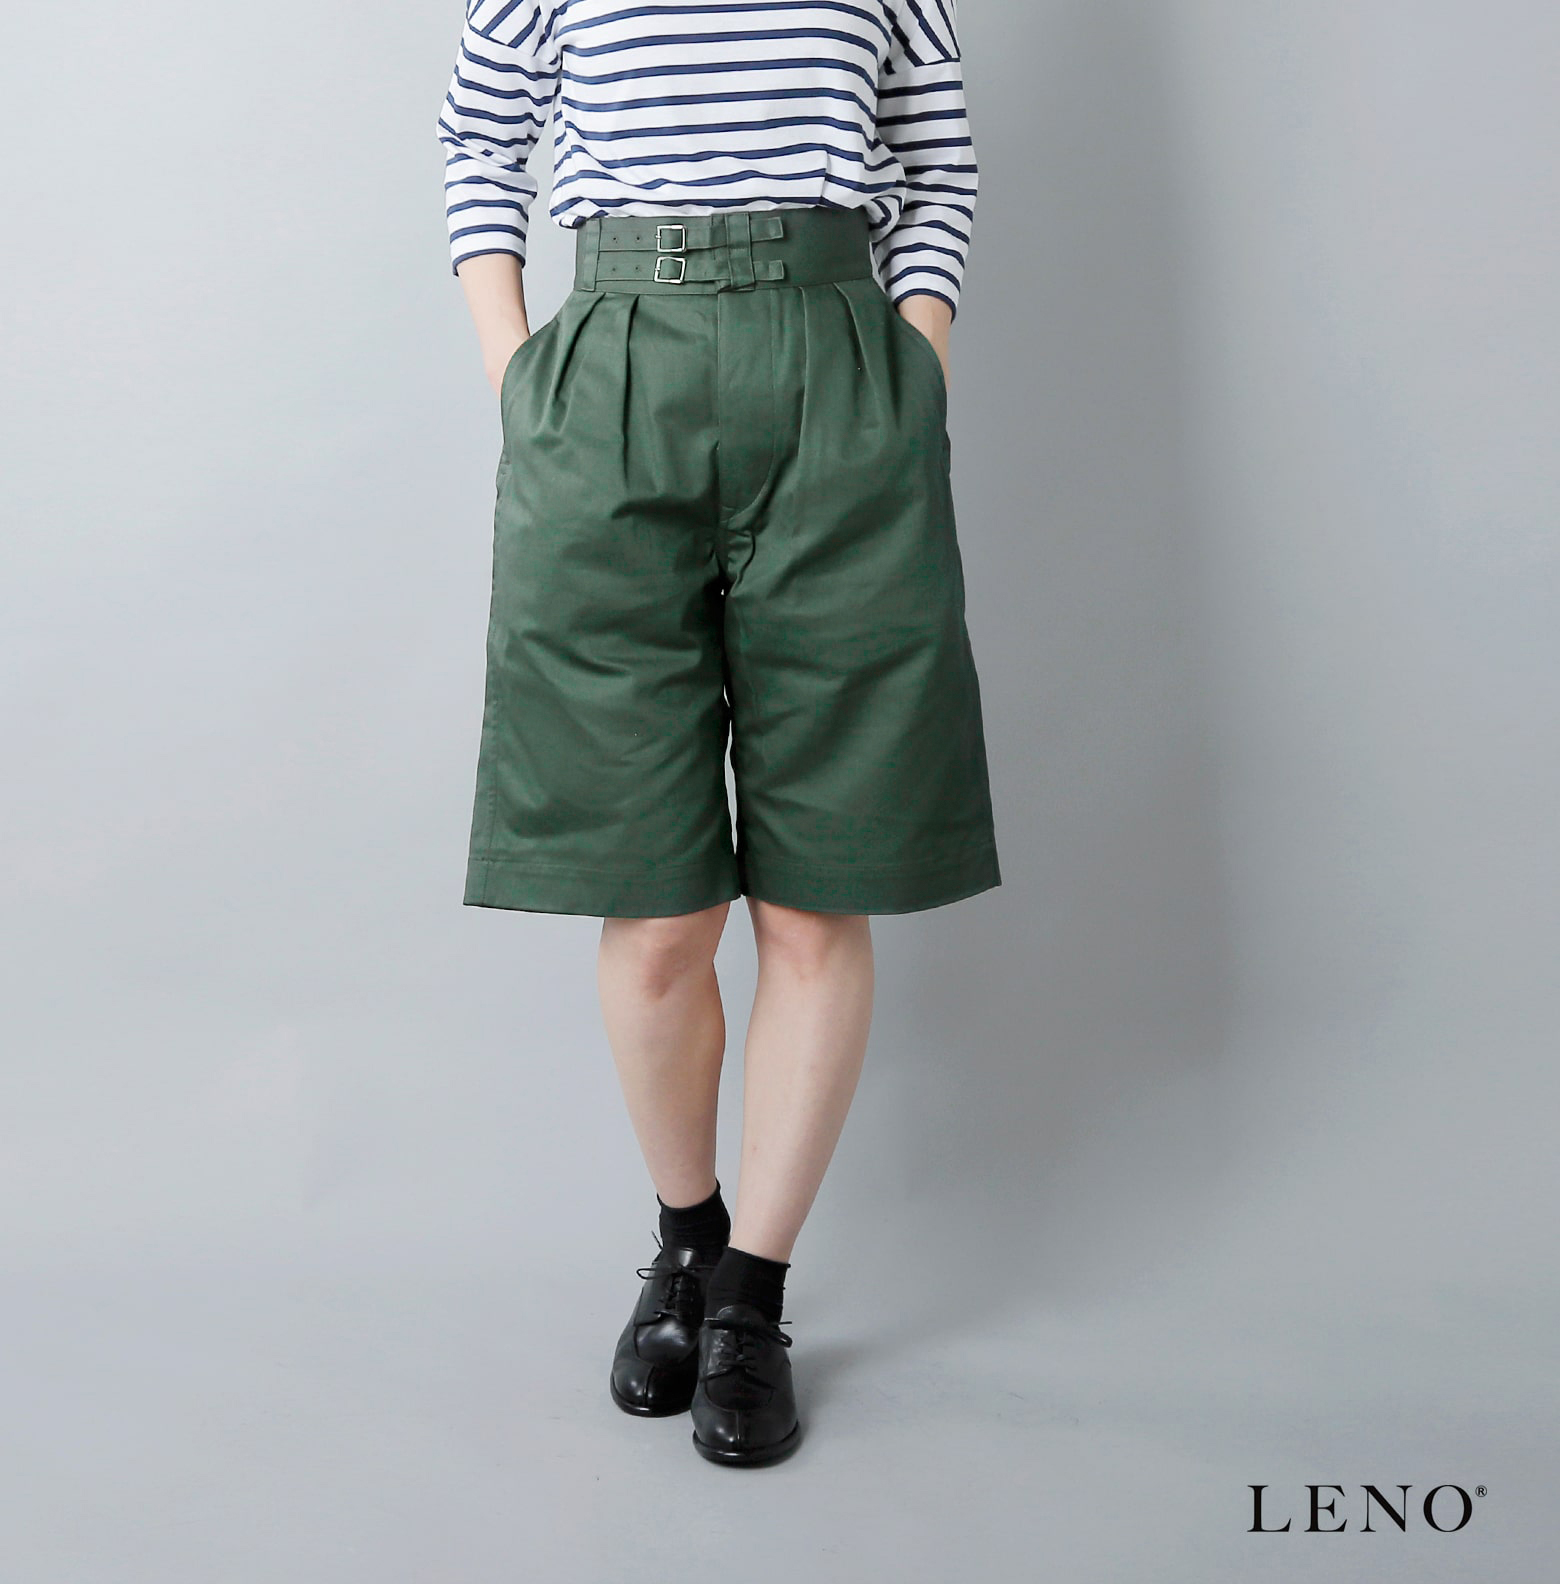 LENO(リノ)グルカショートトラウザーズ”Gurkha Short Trousers” leno 